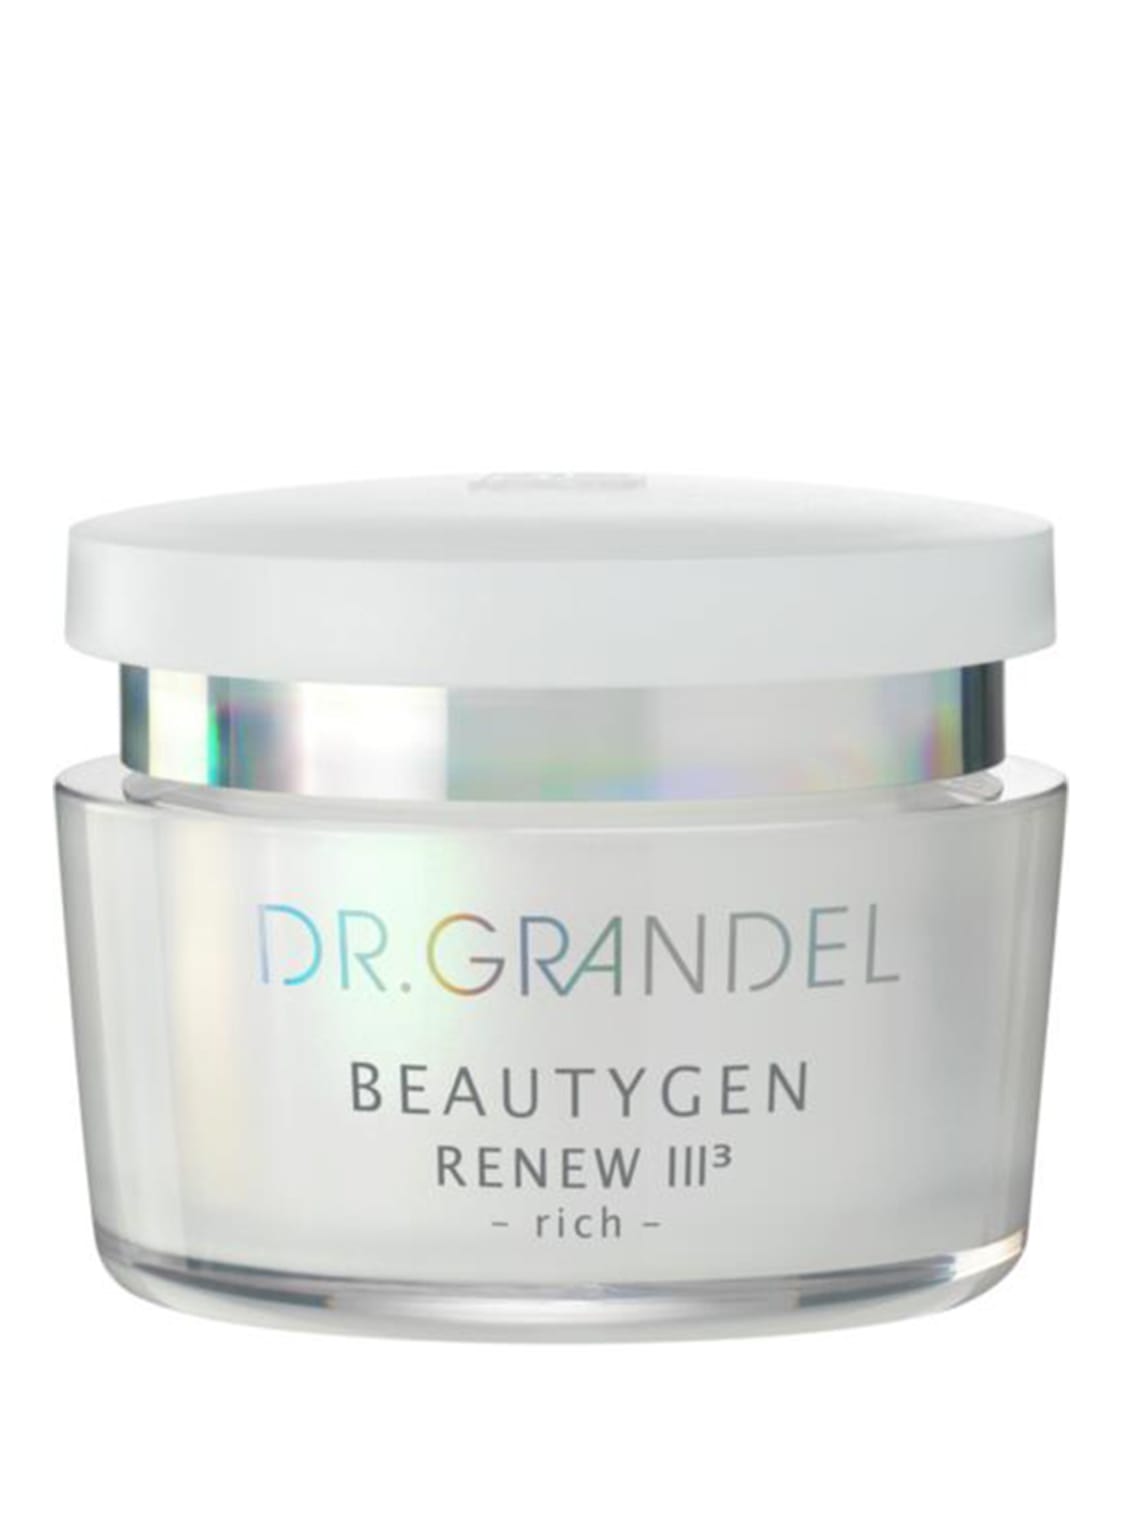 Dr. Grandel Beautygen - Renew Iii Nährende 24 h Pflegecreme für trockene Haut 50 ml von DR. GRANDEL